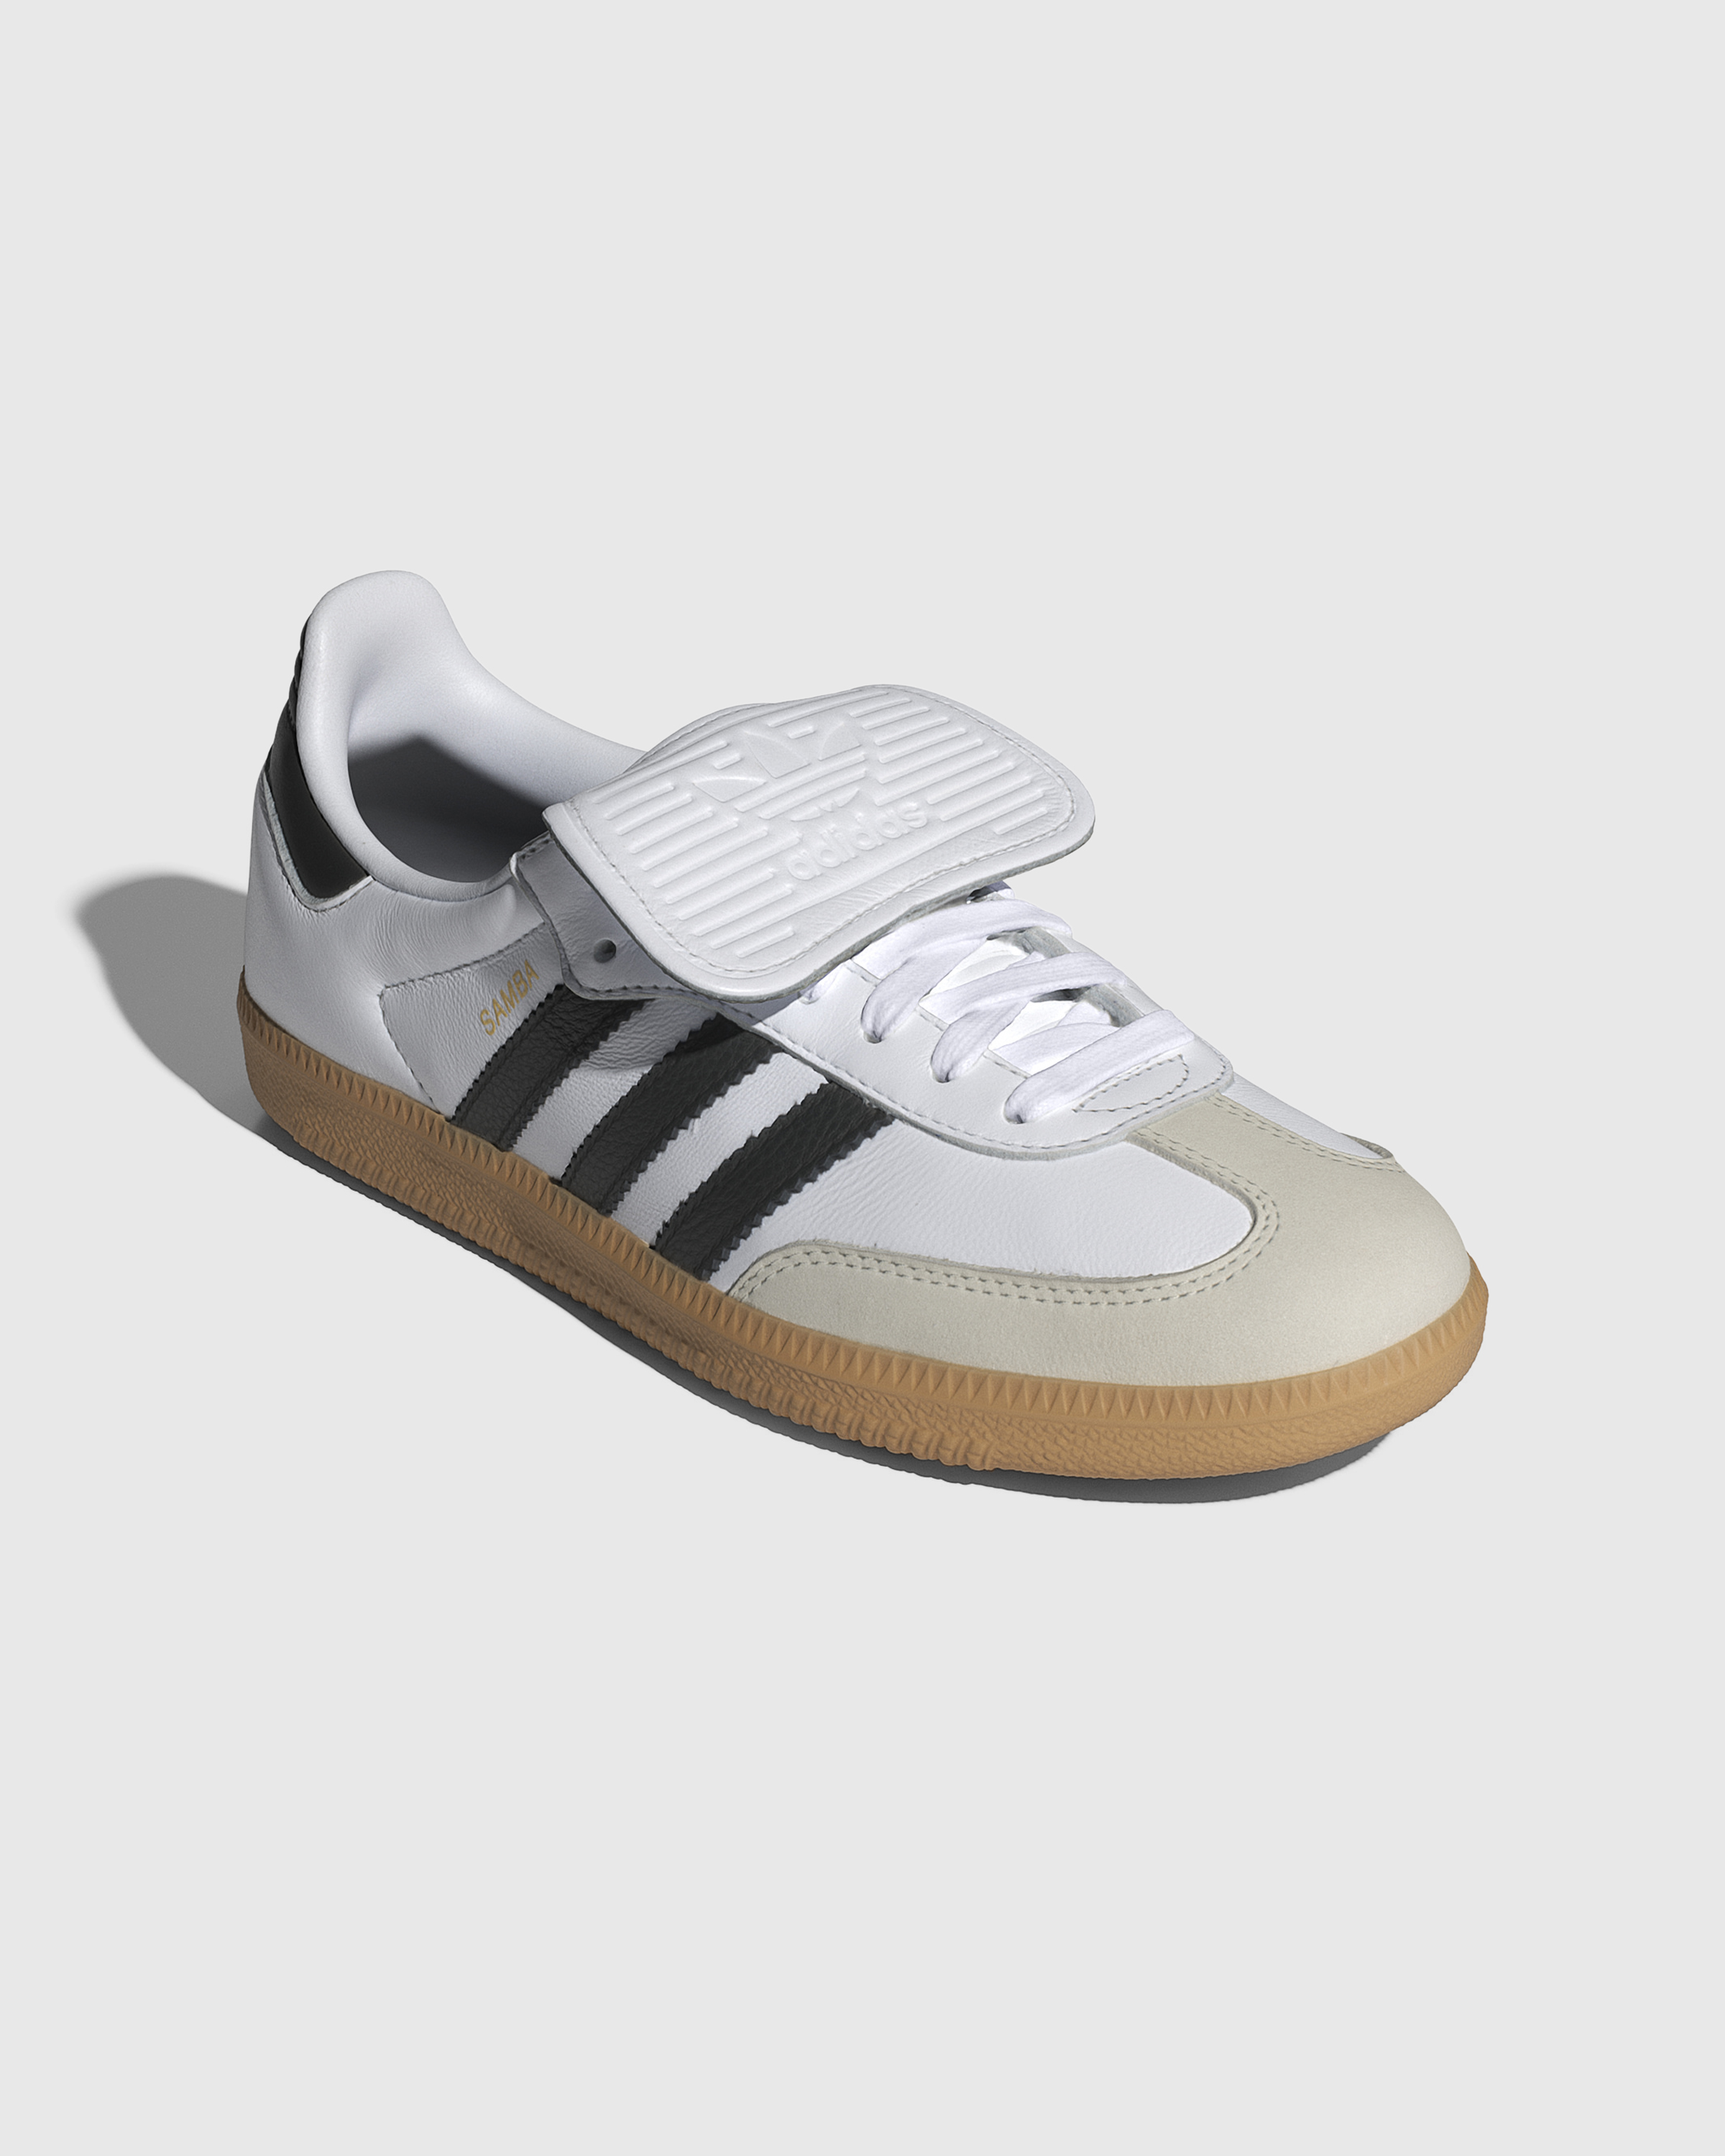 Adidas – Samba LT W White/Black/Gold - Low Top Sneakers - White - Image 3